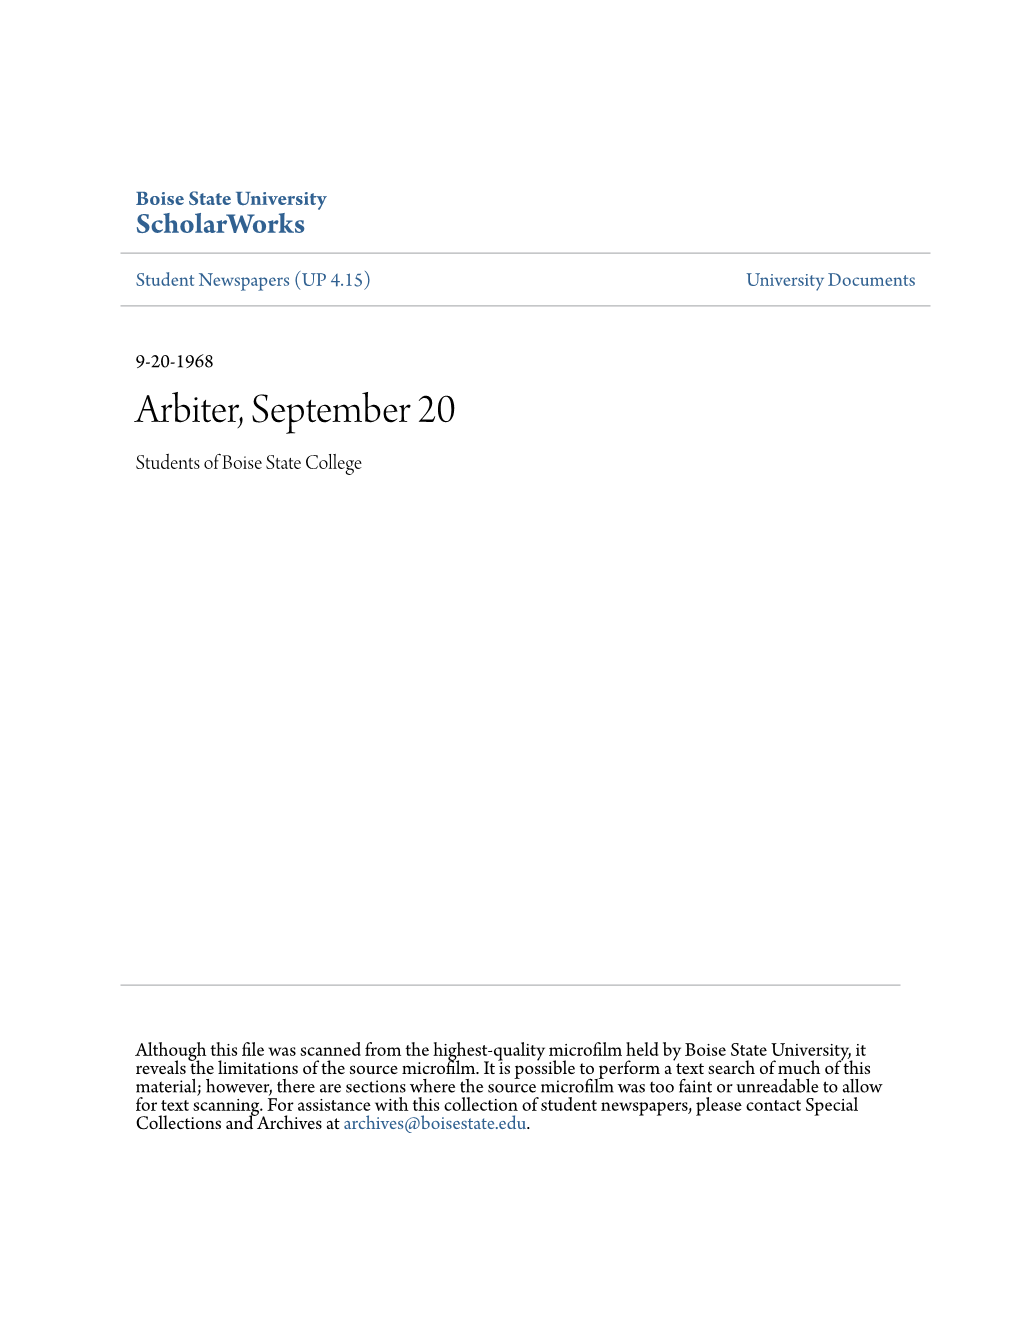 Arbiter, September 20 Students of Boise State College